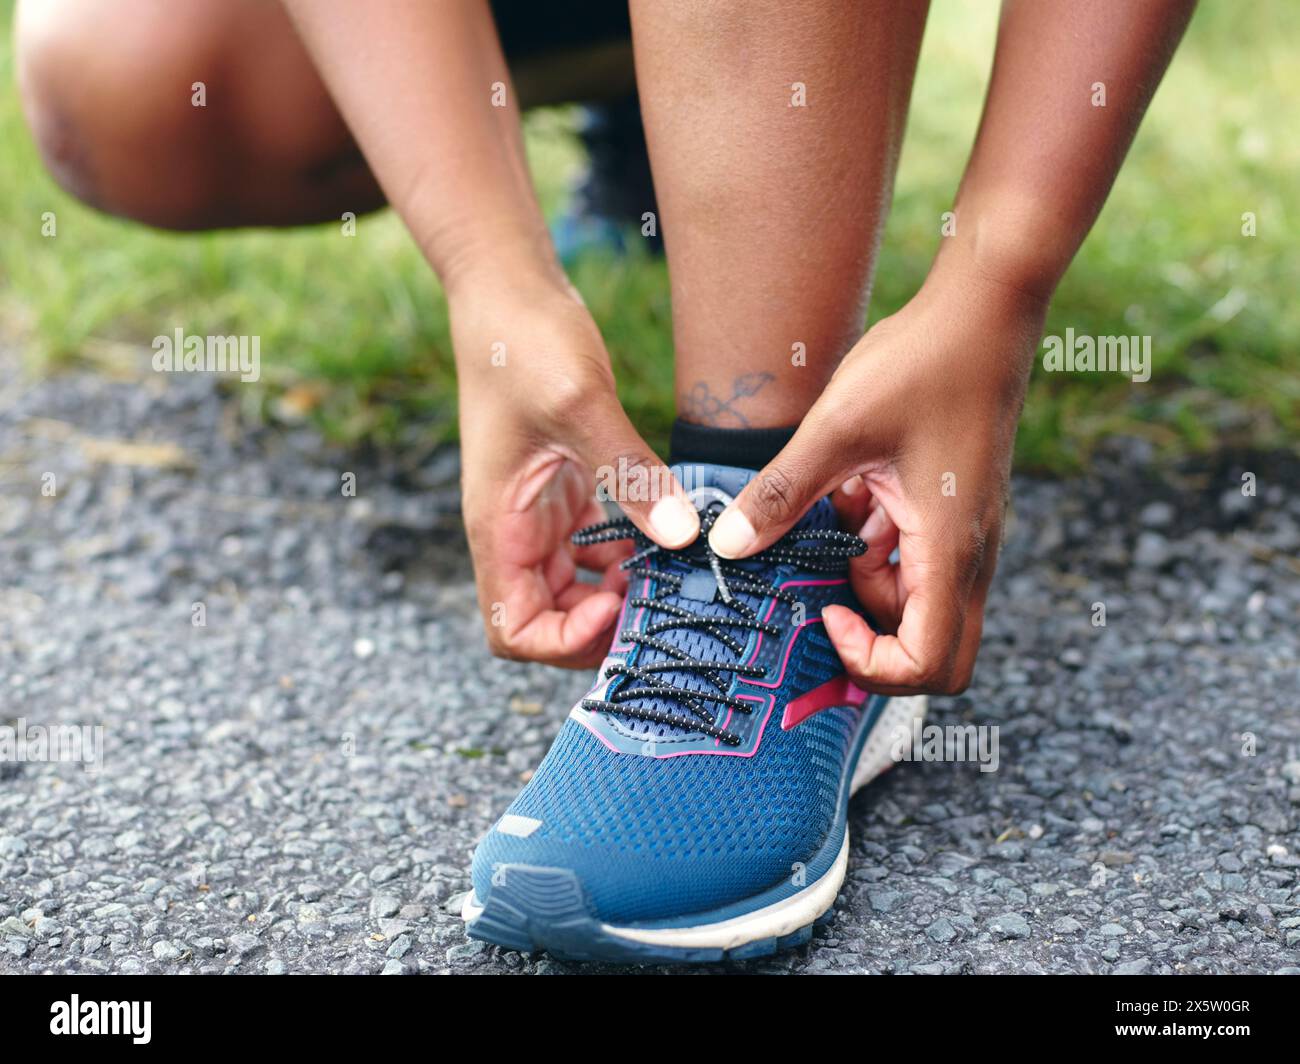 Woman tying running shoe laces Stock Photo